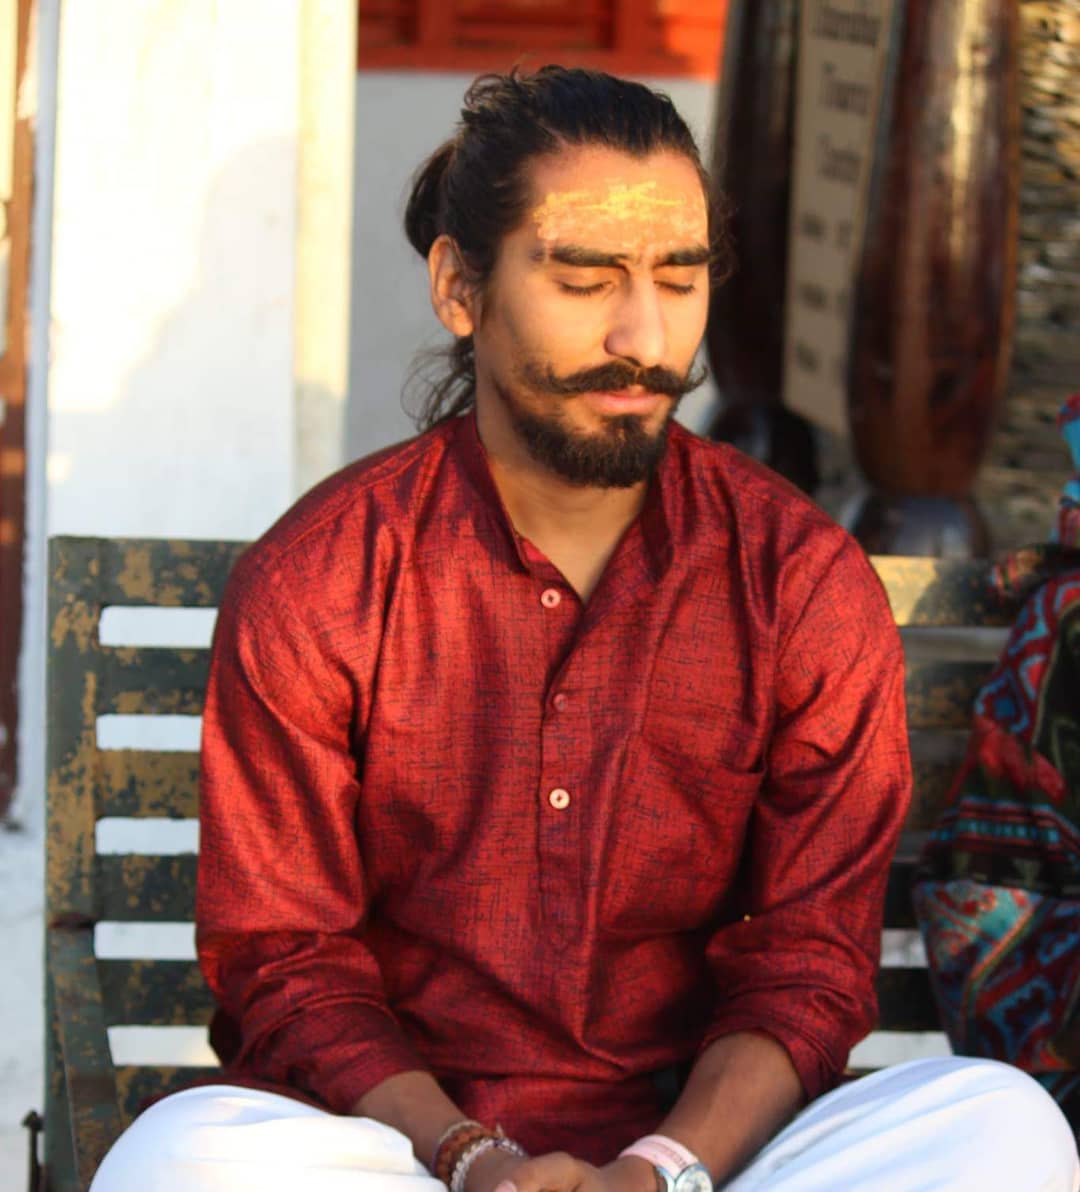 14 - days 100 - Hour Yoga Teacher Training Course in Rishikesh